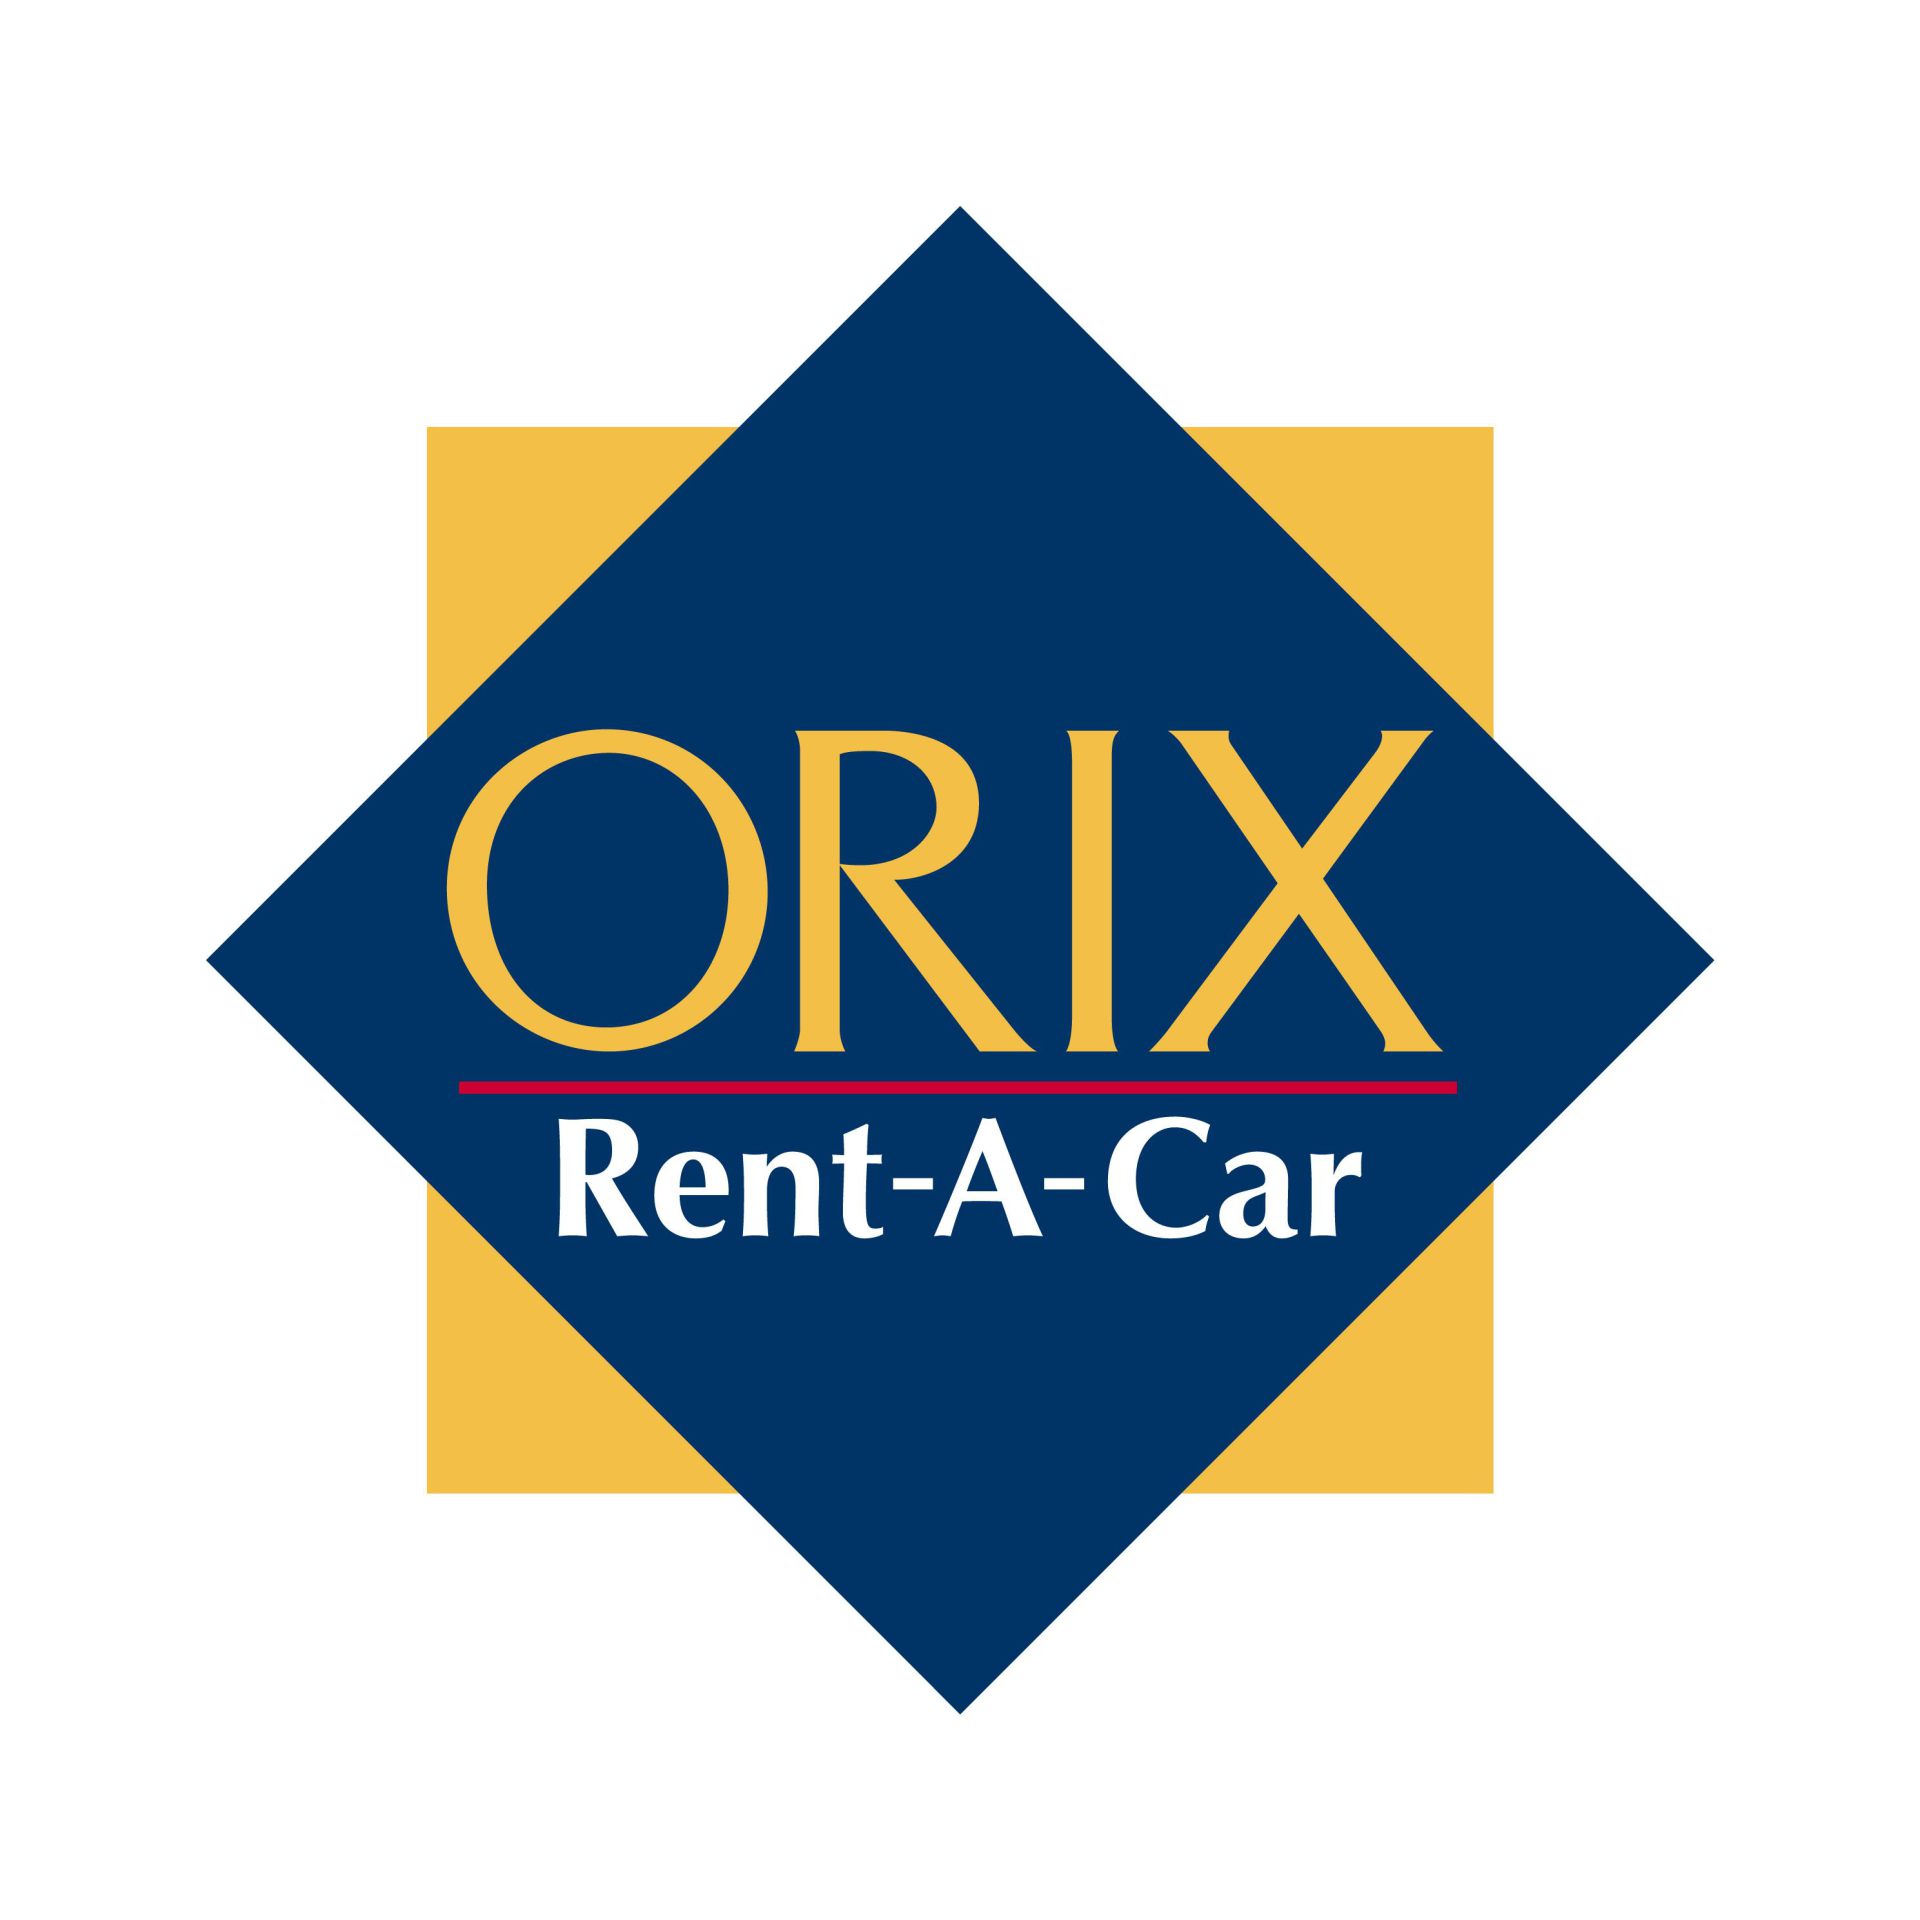 ORIX Rent-A-Car Takarazuka Opera House Mae